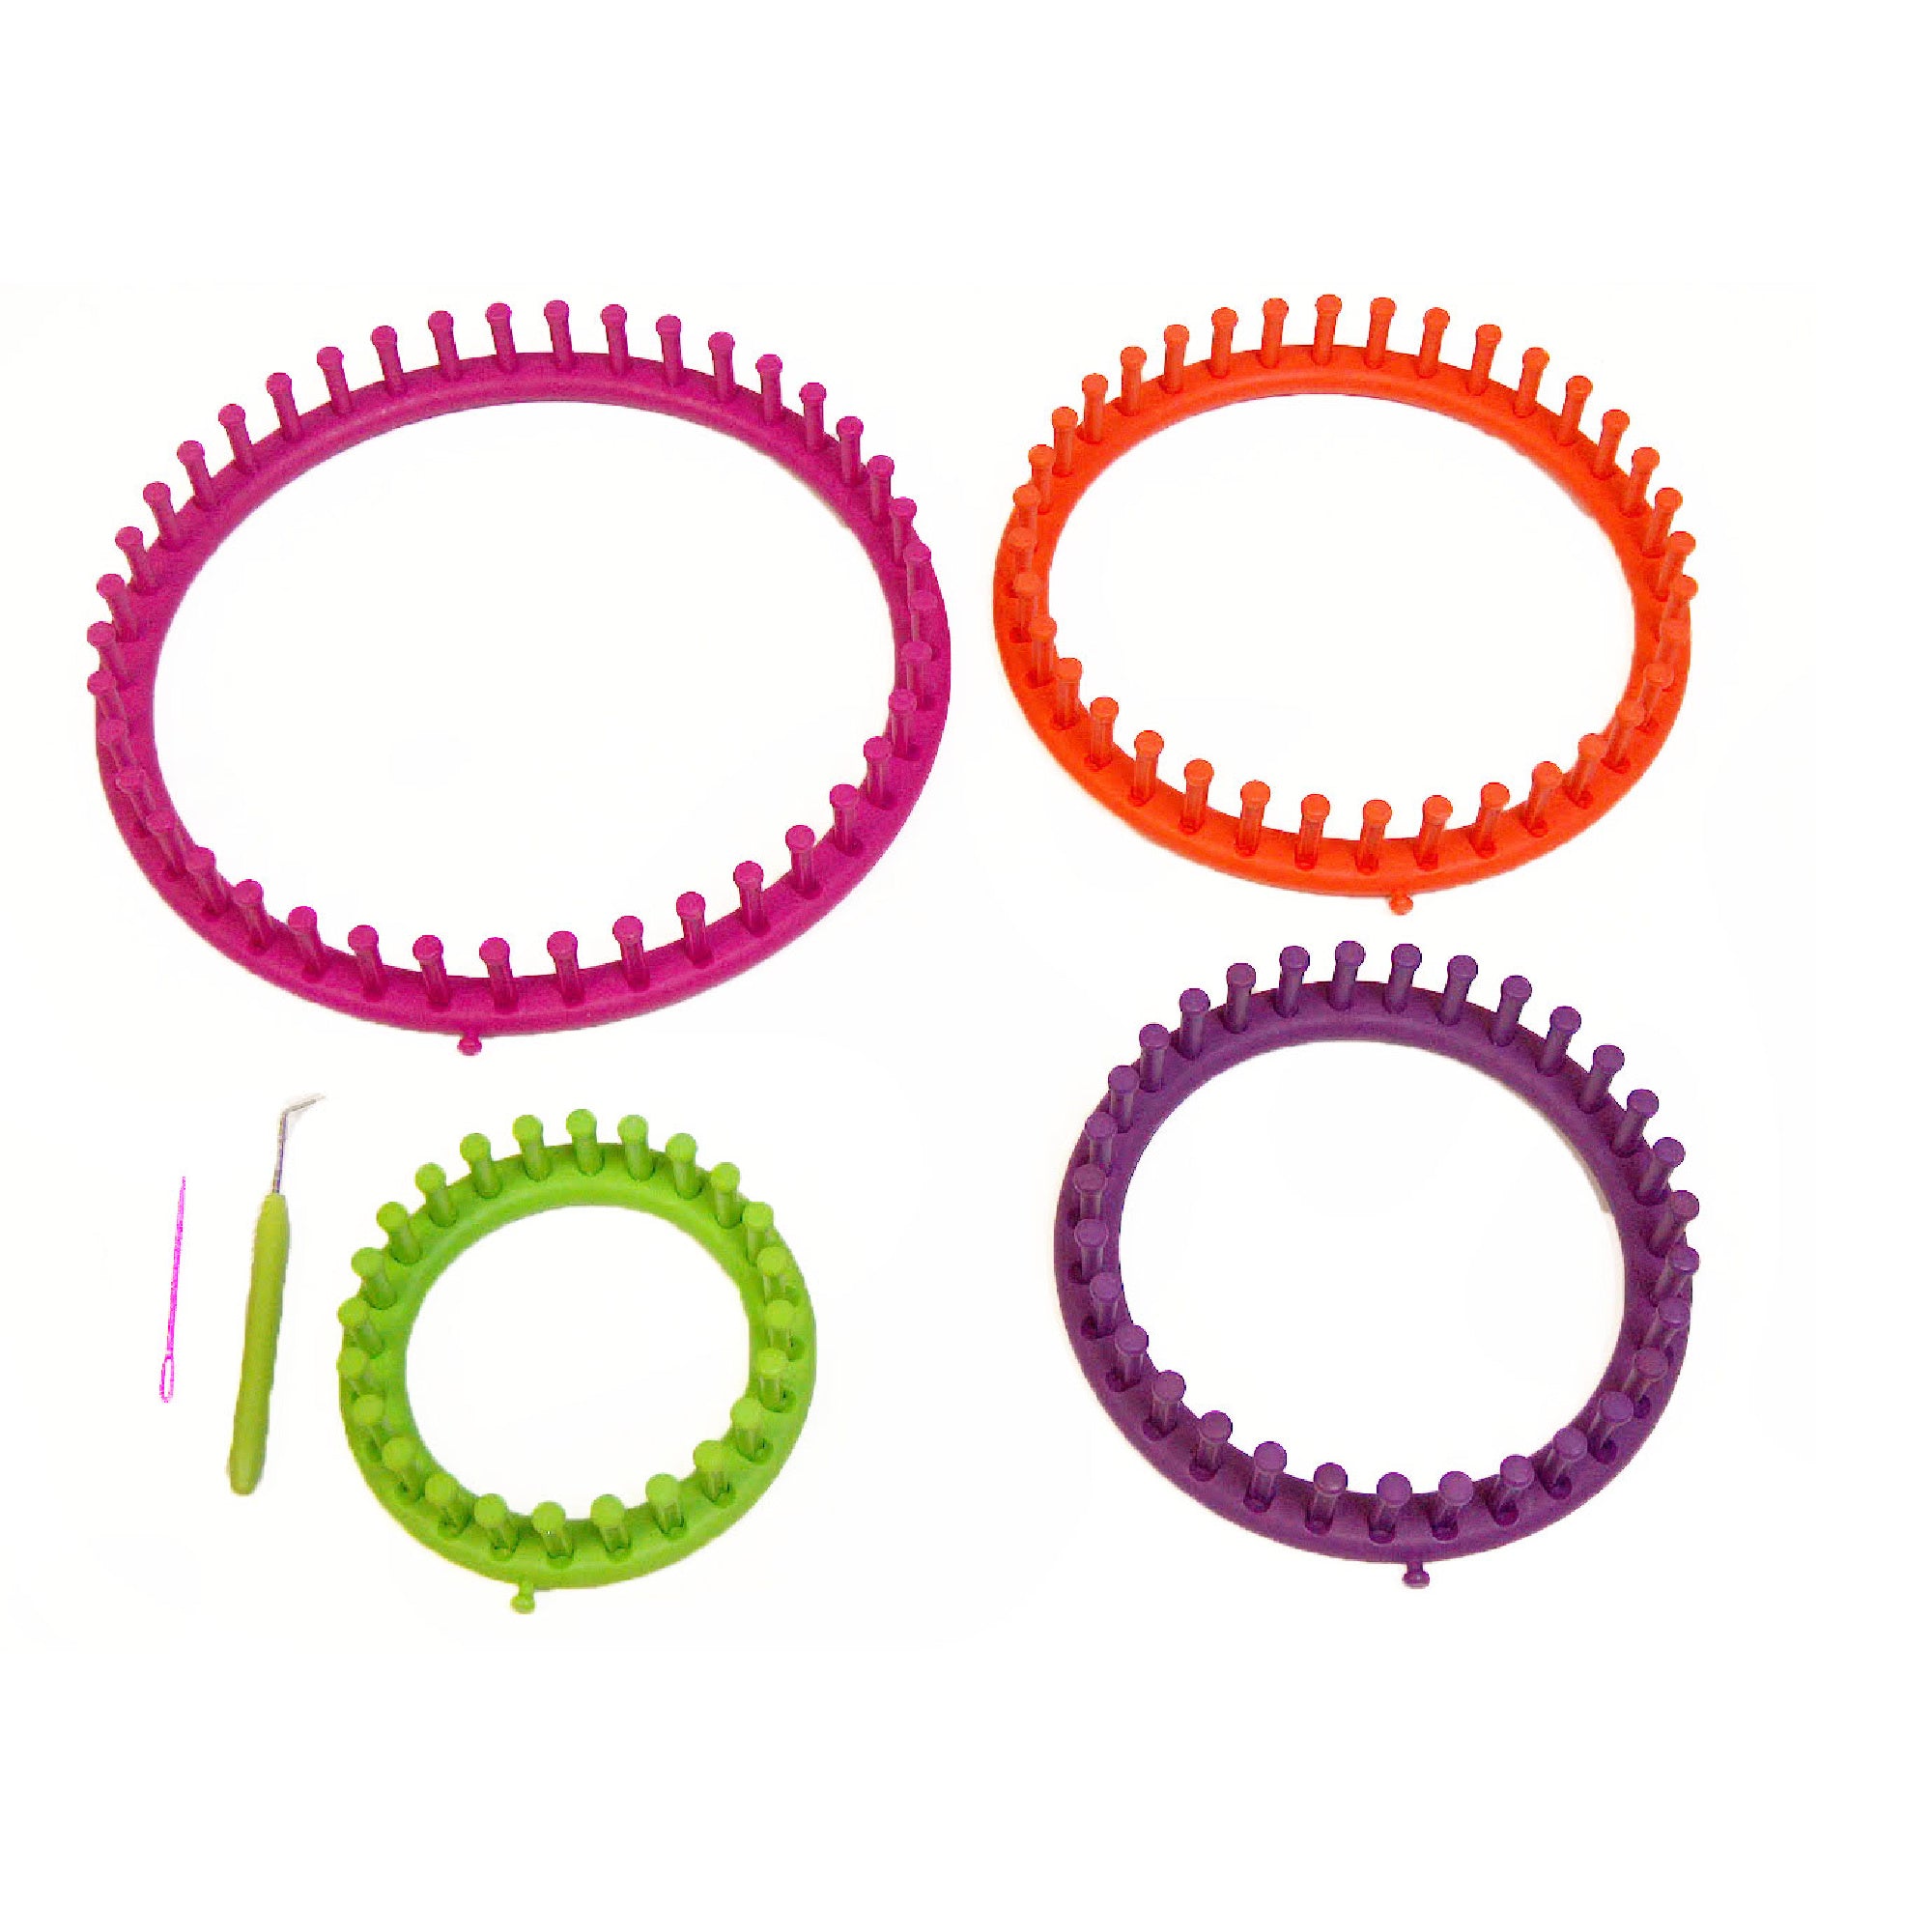 Plastic Crochet Hook Set by Loops & Threads®, L/P/Q